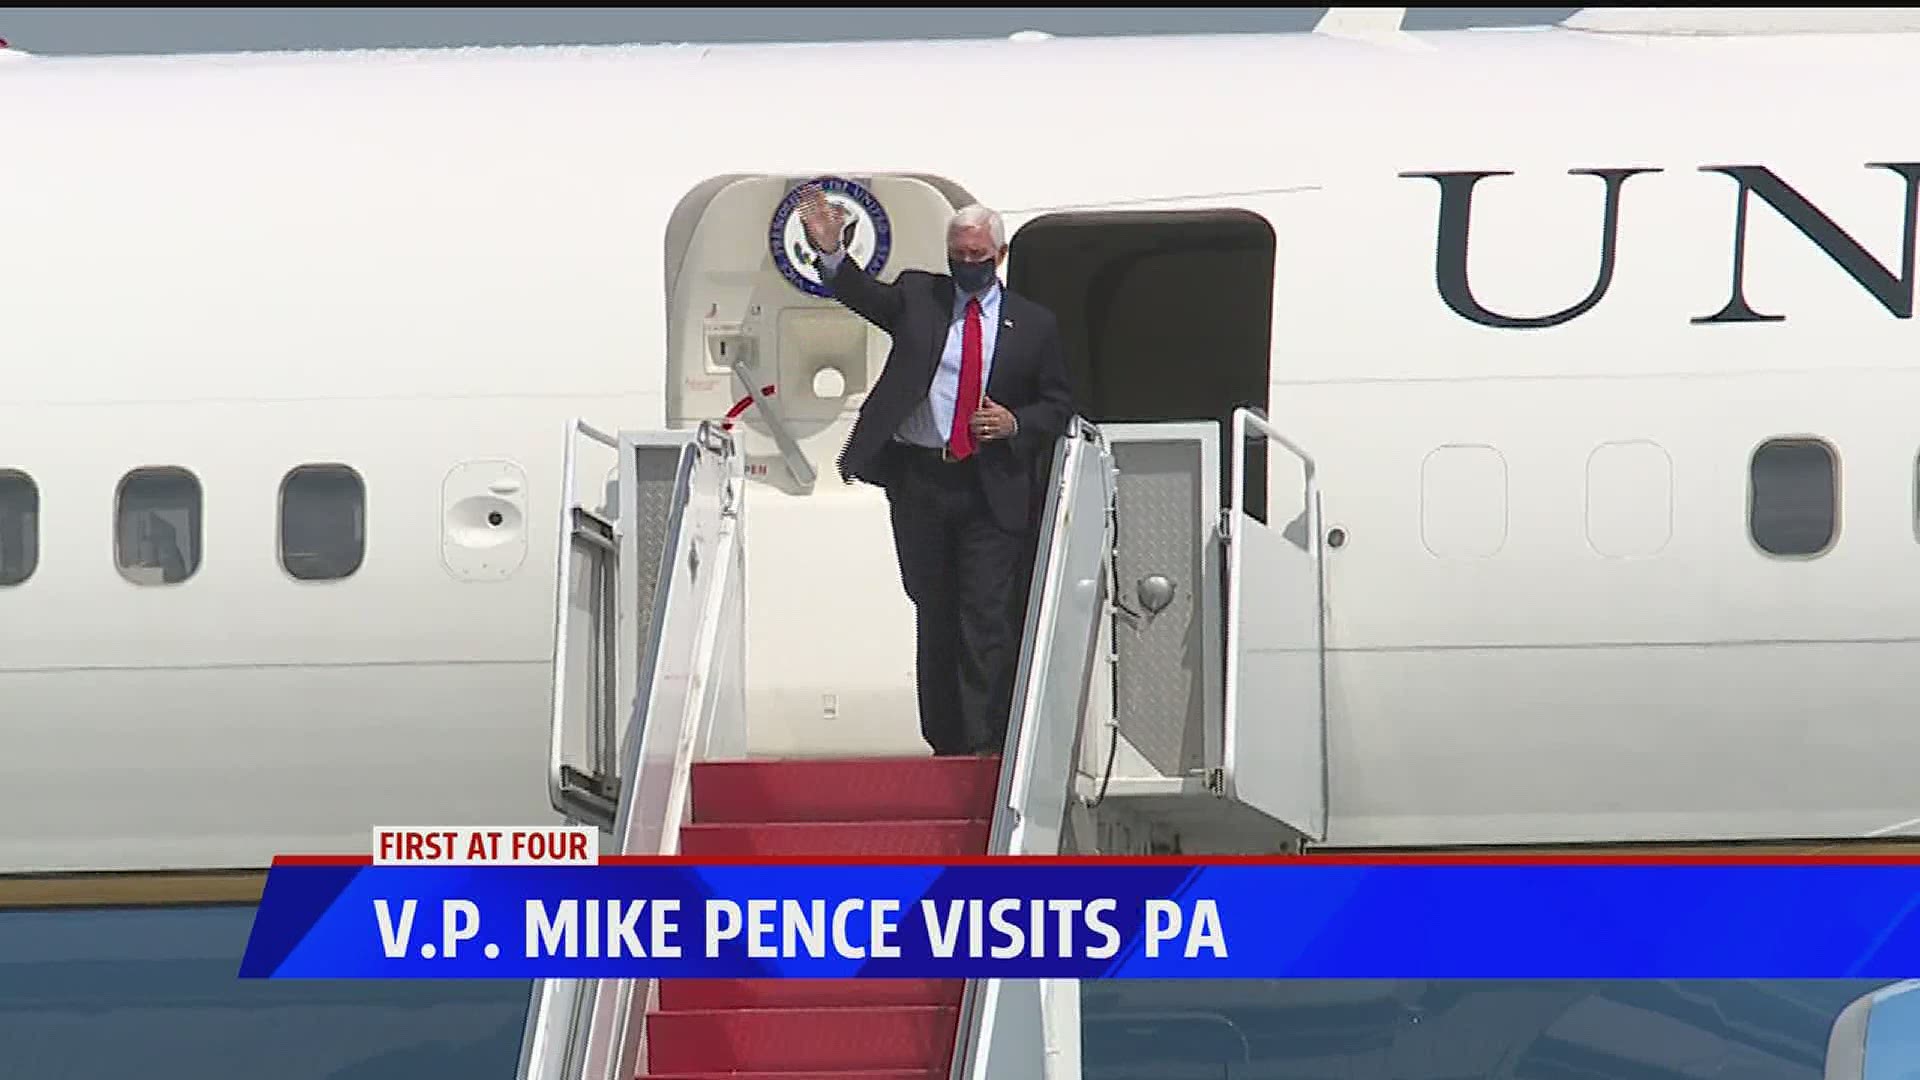 V.P. Mike Pence visits PA